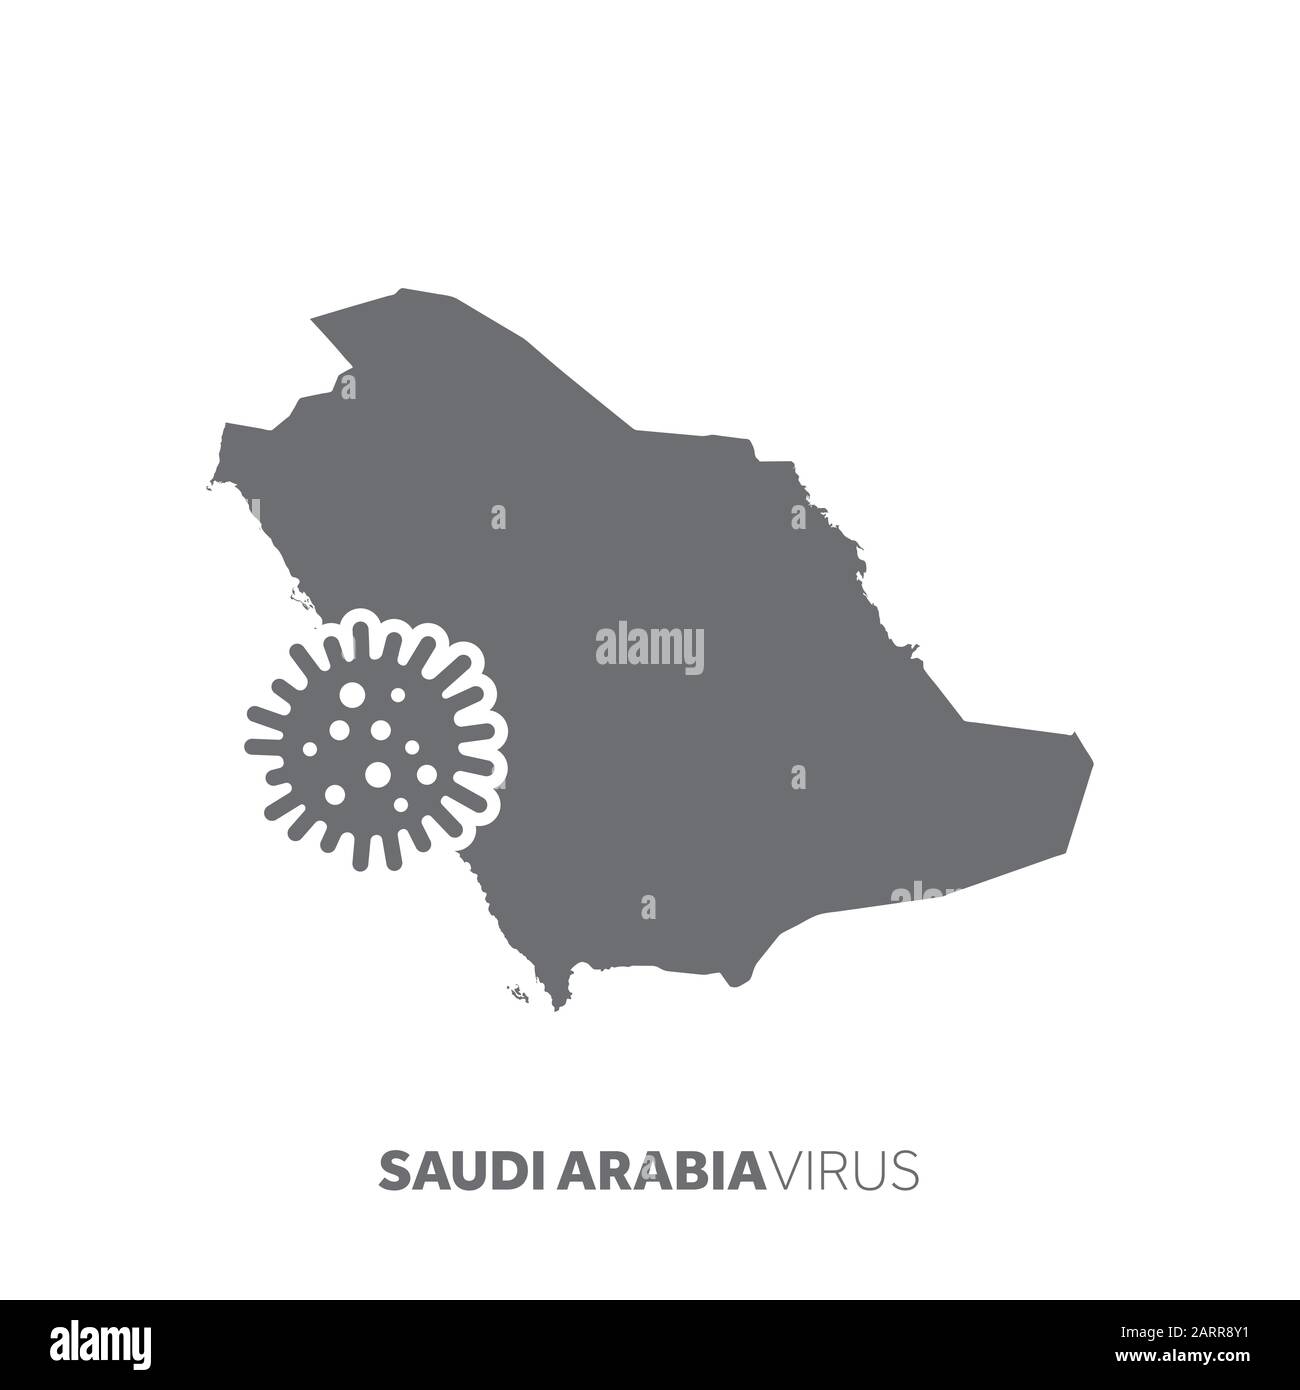 Saudi Arabia map with a virus microbe. Illness and disease outbreak Stock Vector